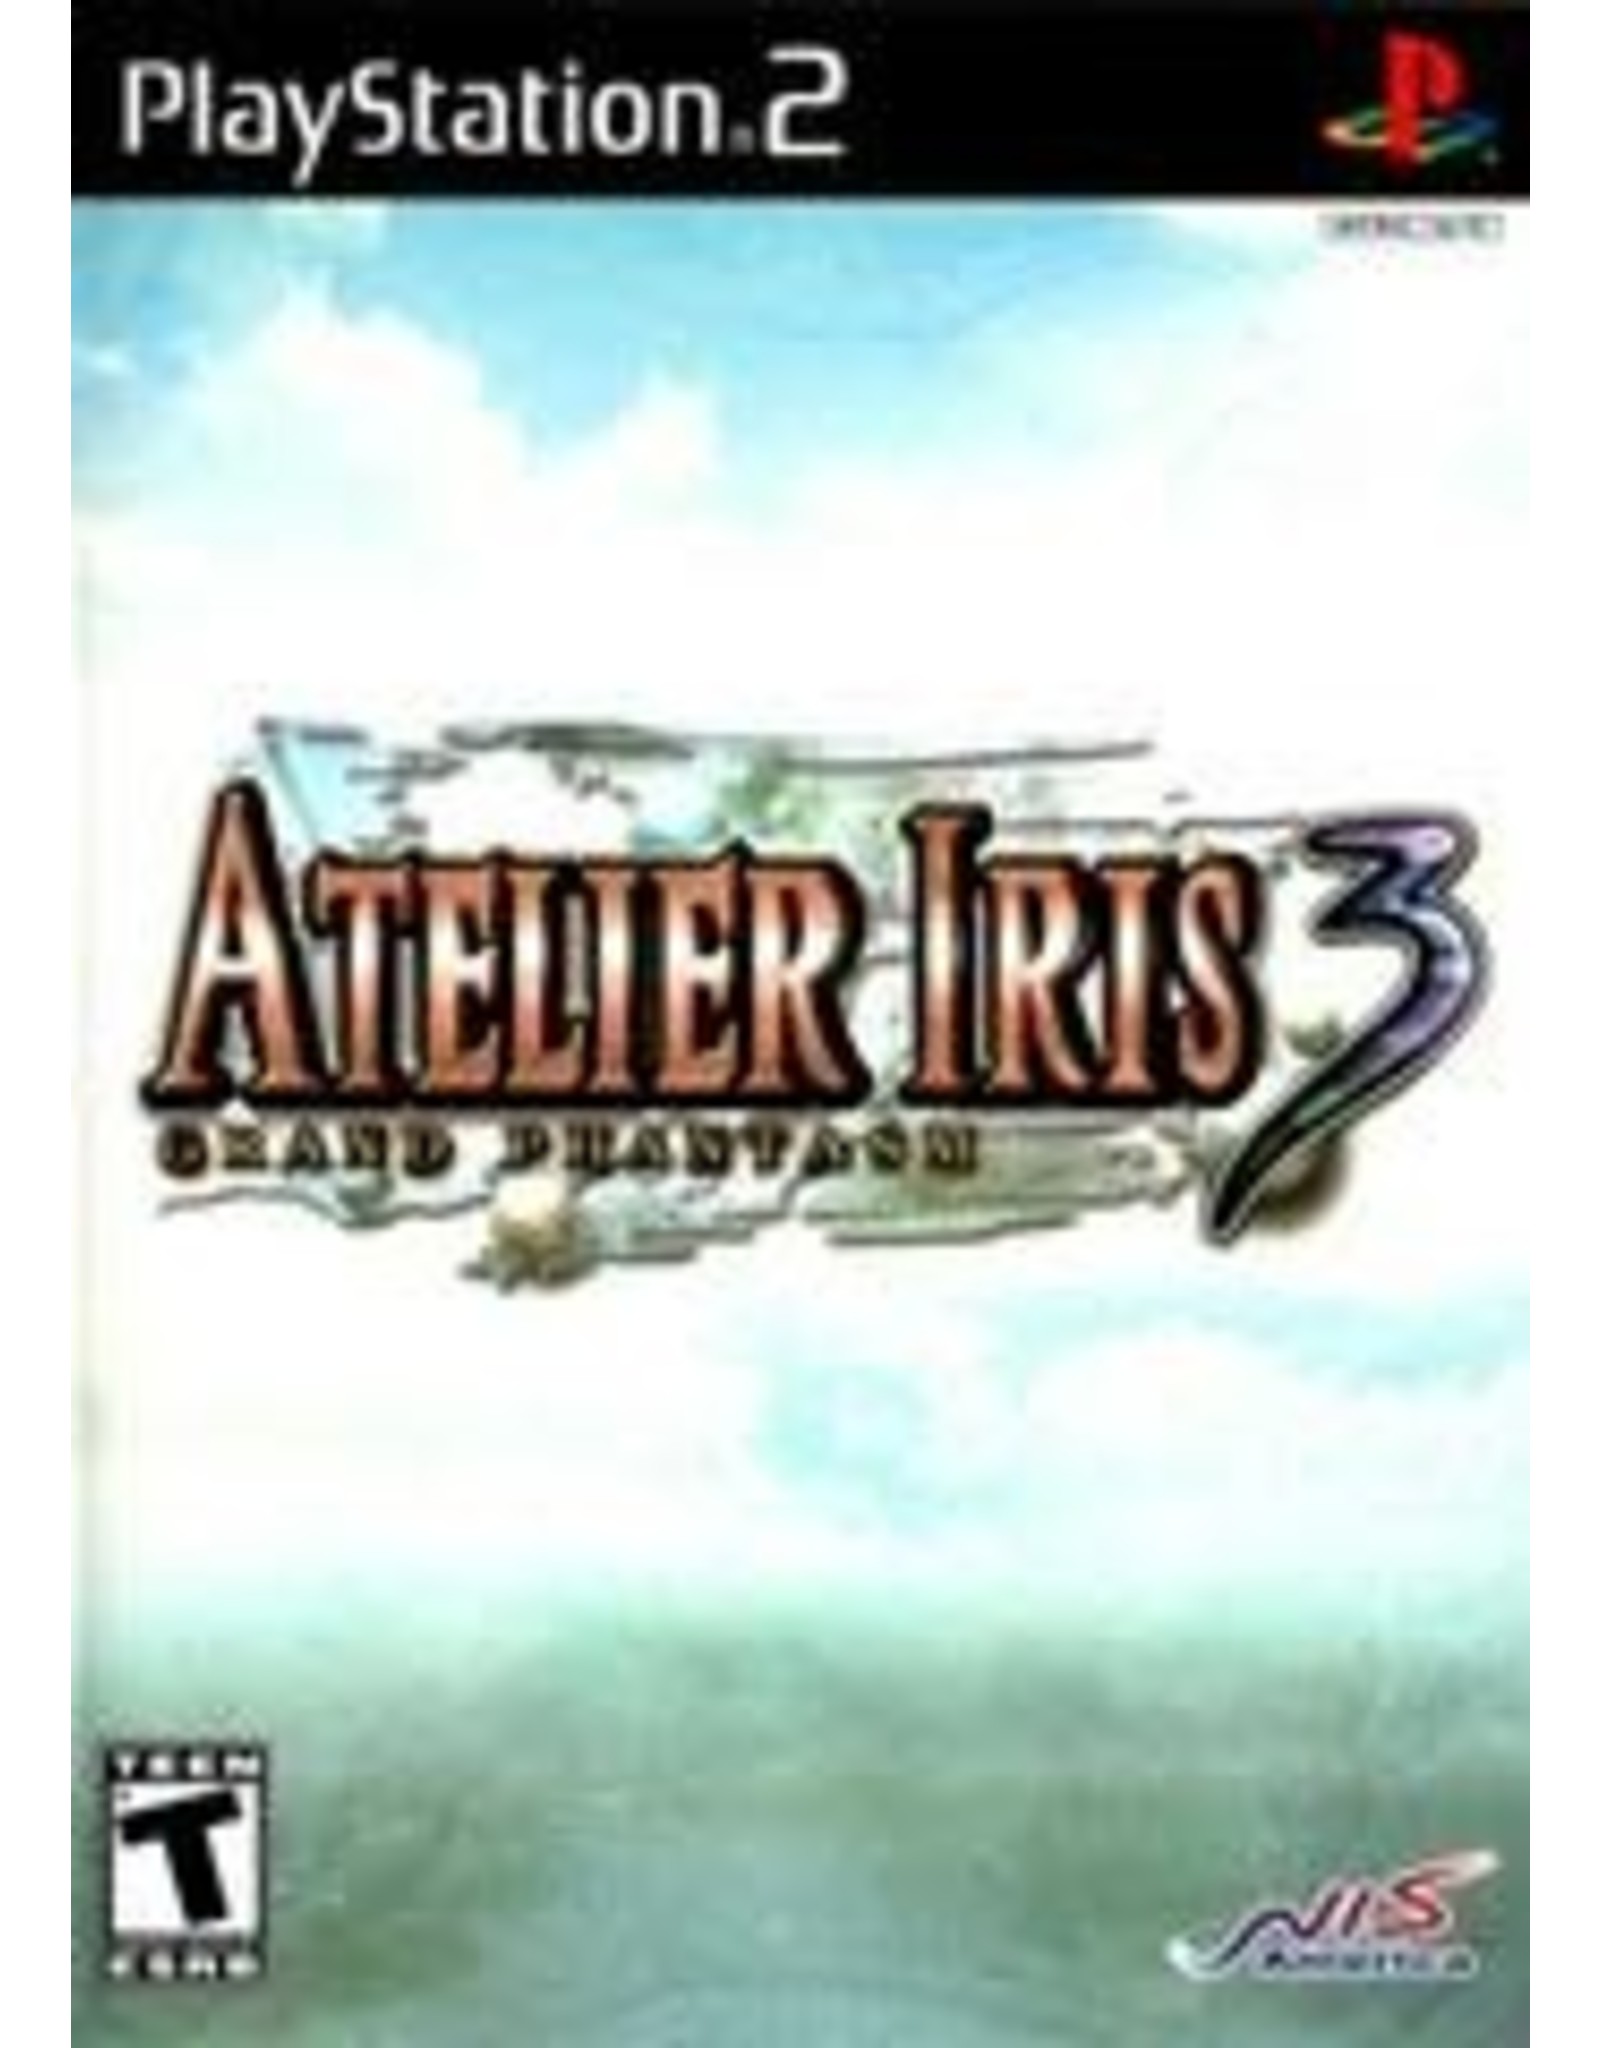 Playstation 2 Atelier Iris 3 Grand Phantasm (No Manual, Sticker on Disc)